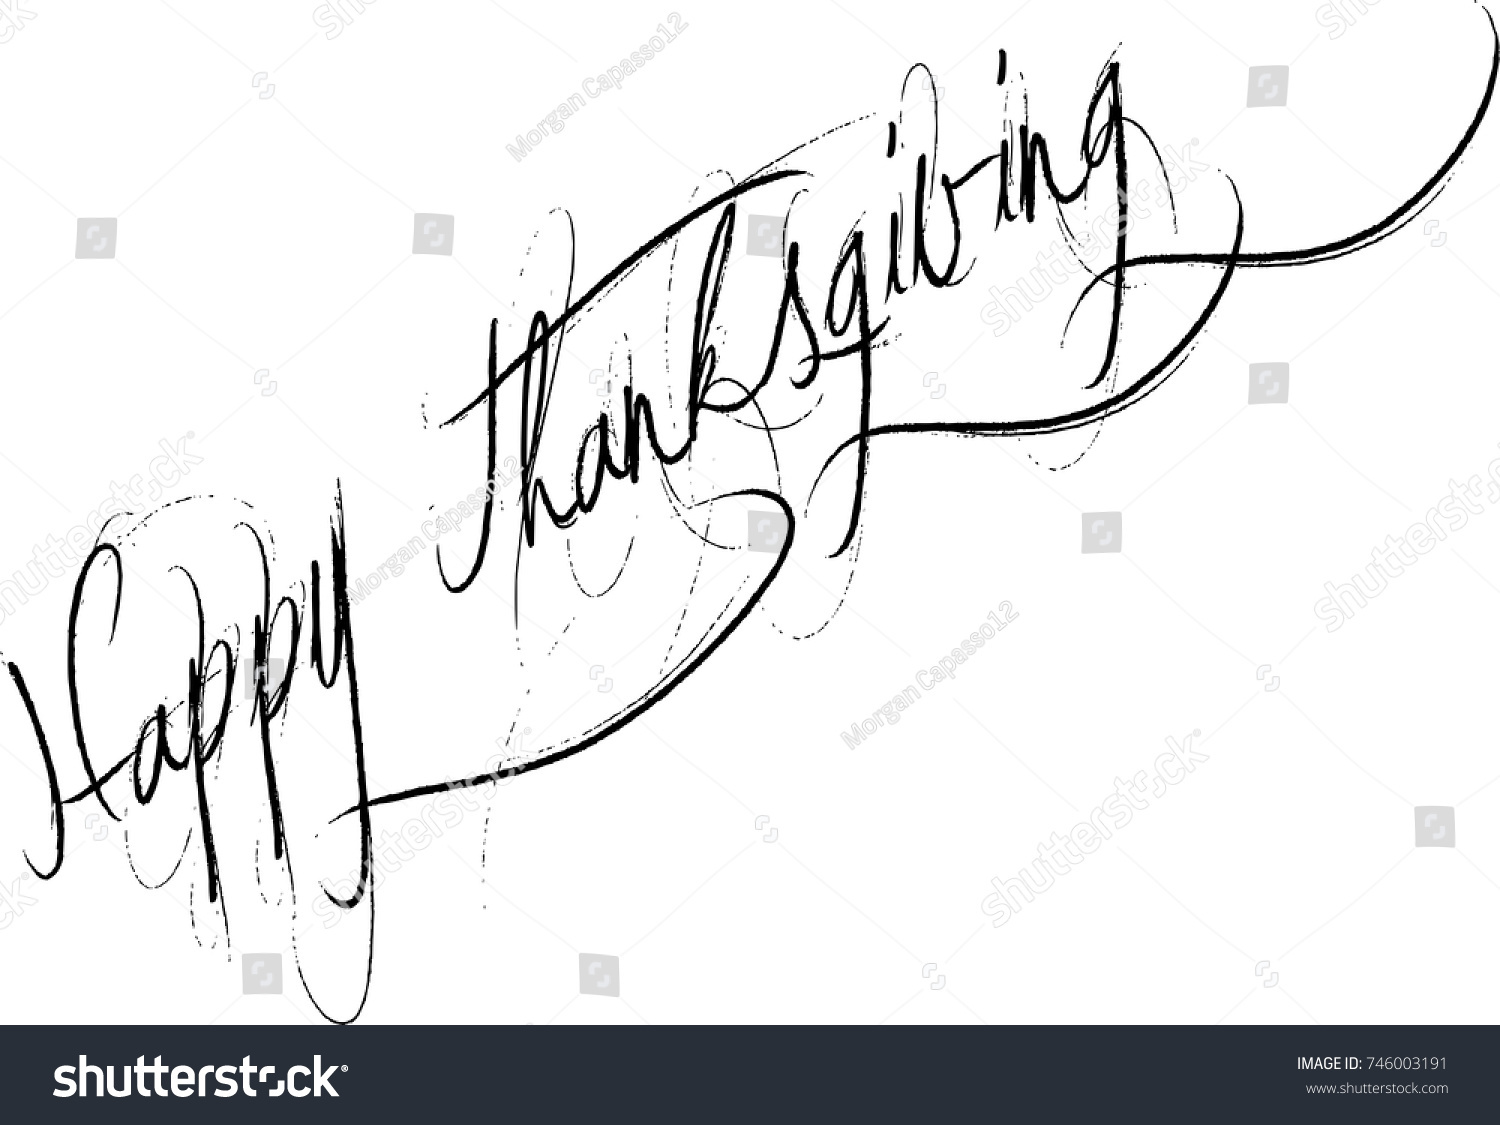 Happy Thanksgiving text sign illustration on white illustration. #746003191